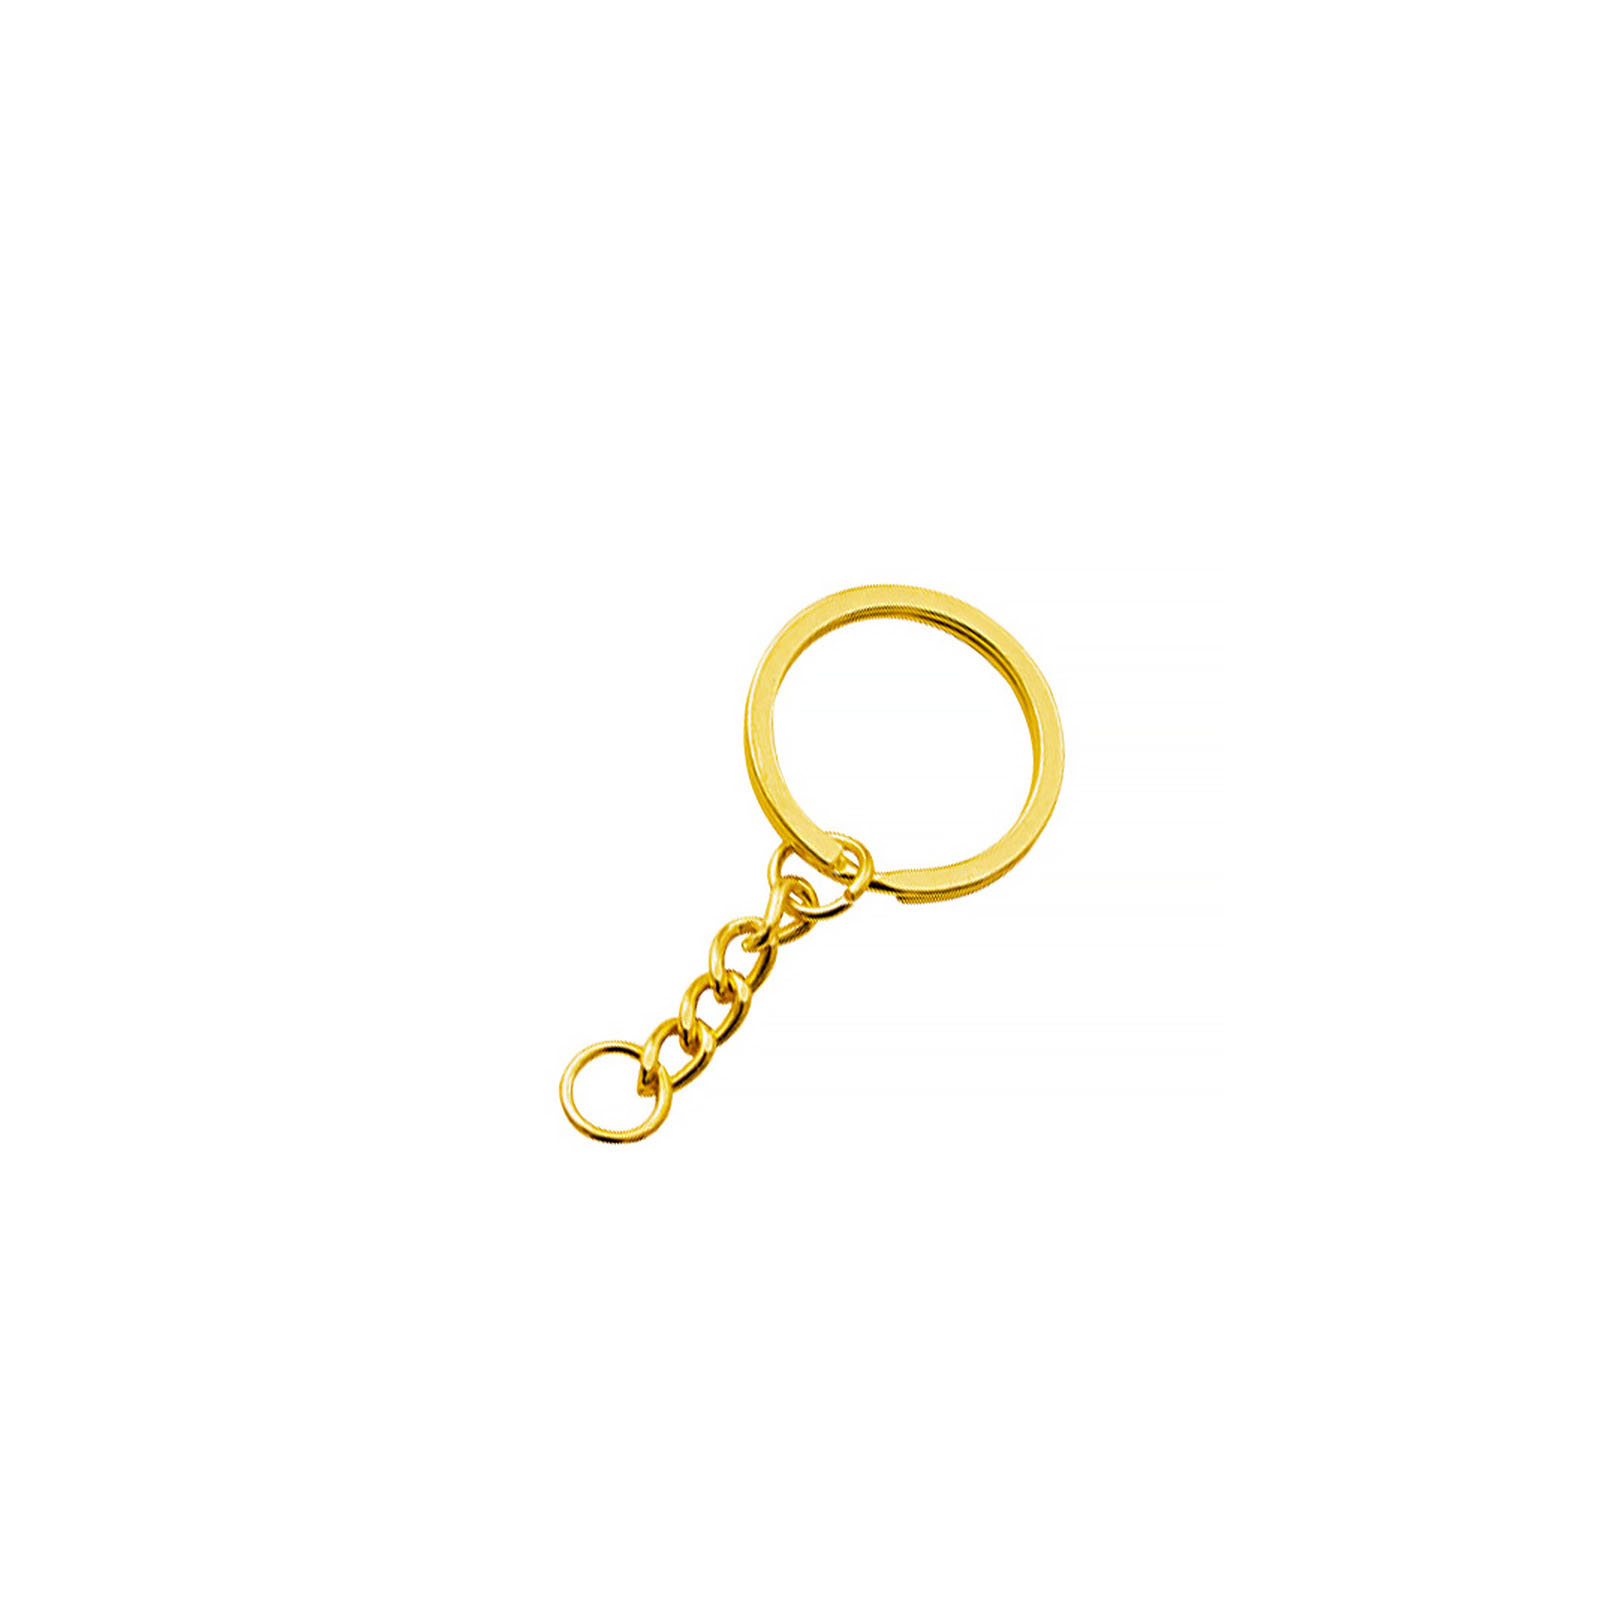 2.5 cm key chain (Gold)